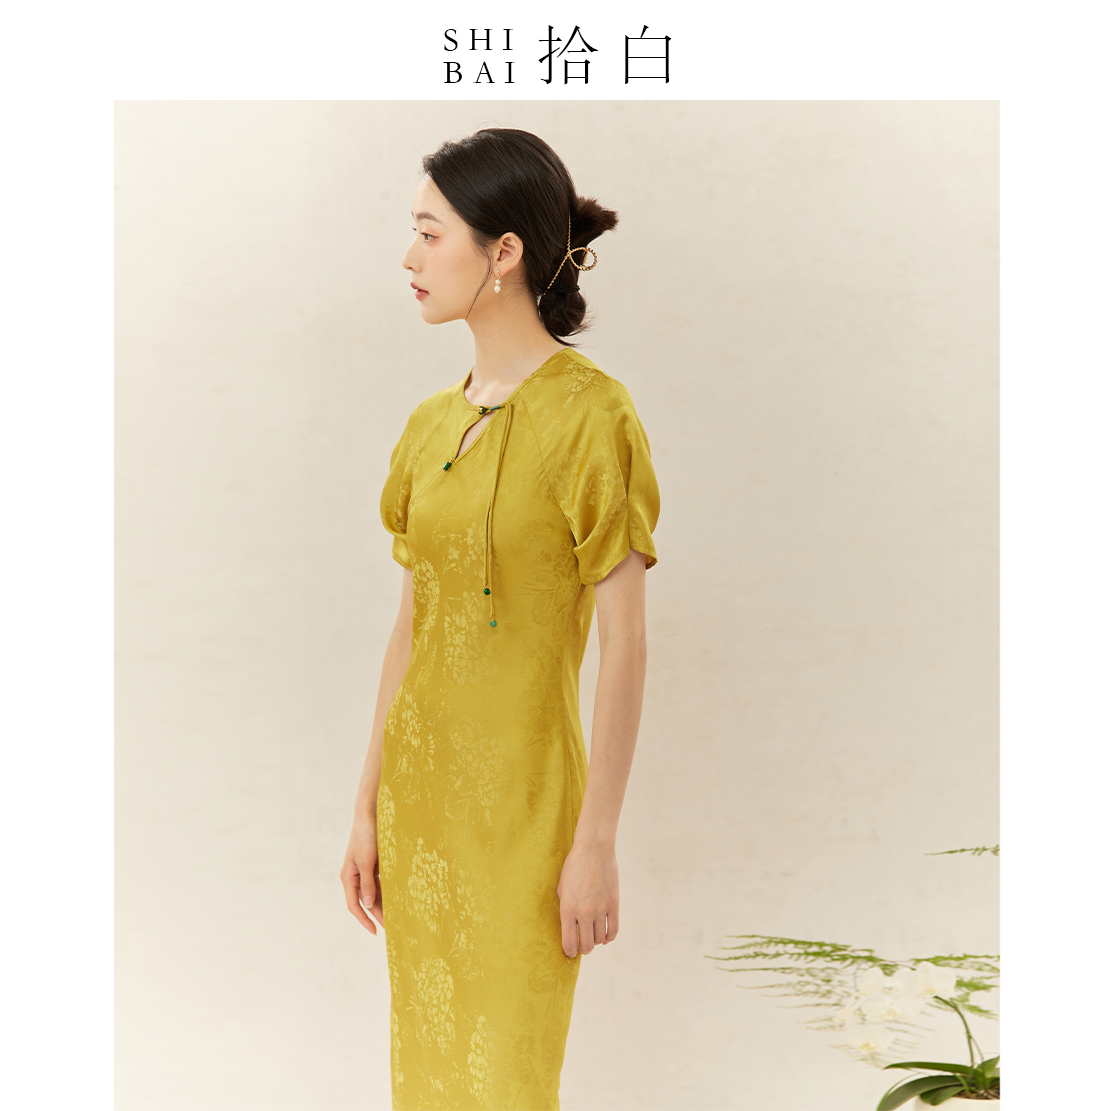 SHIBAI拾白新中式连衣裙原创国风女装优雅黄色裙子女茶服日常通勤 - 图2